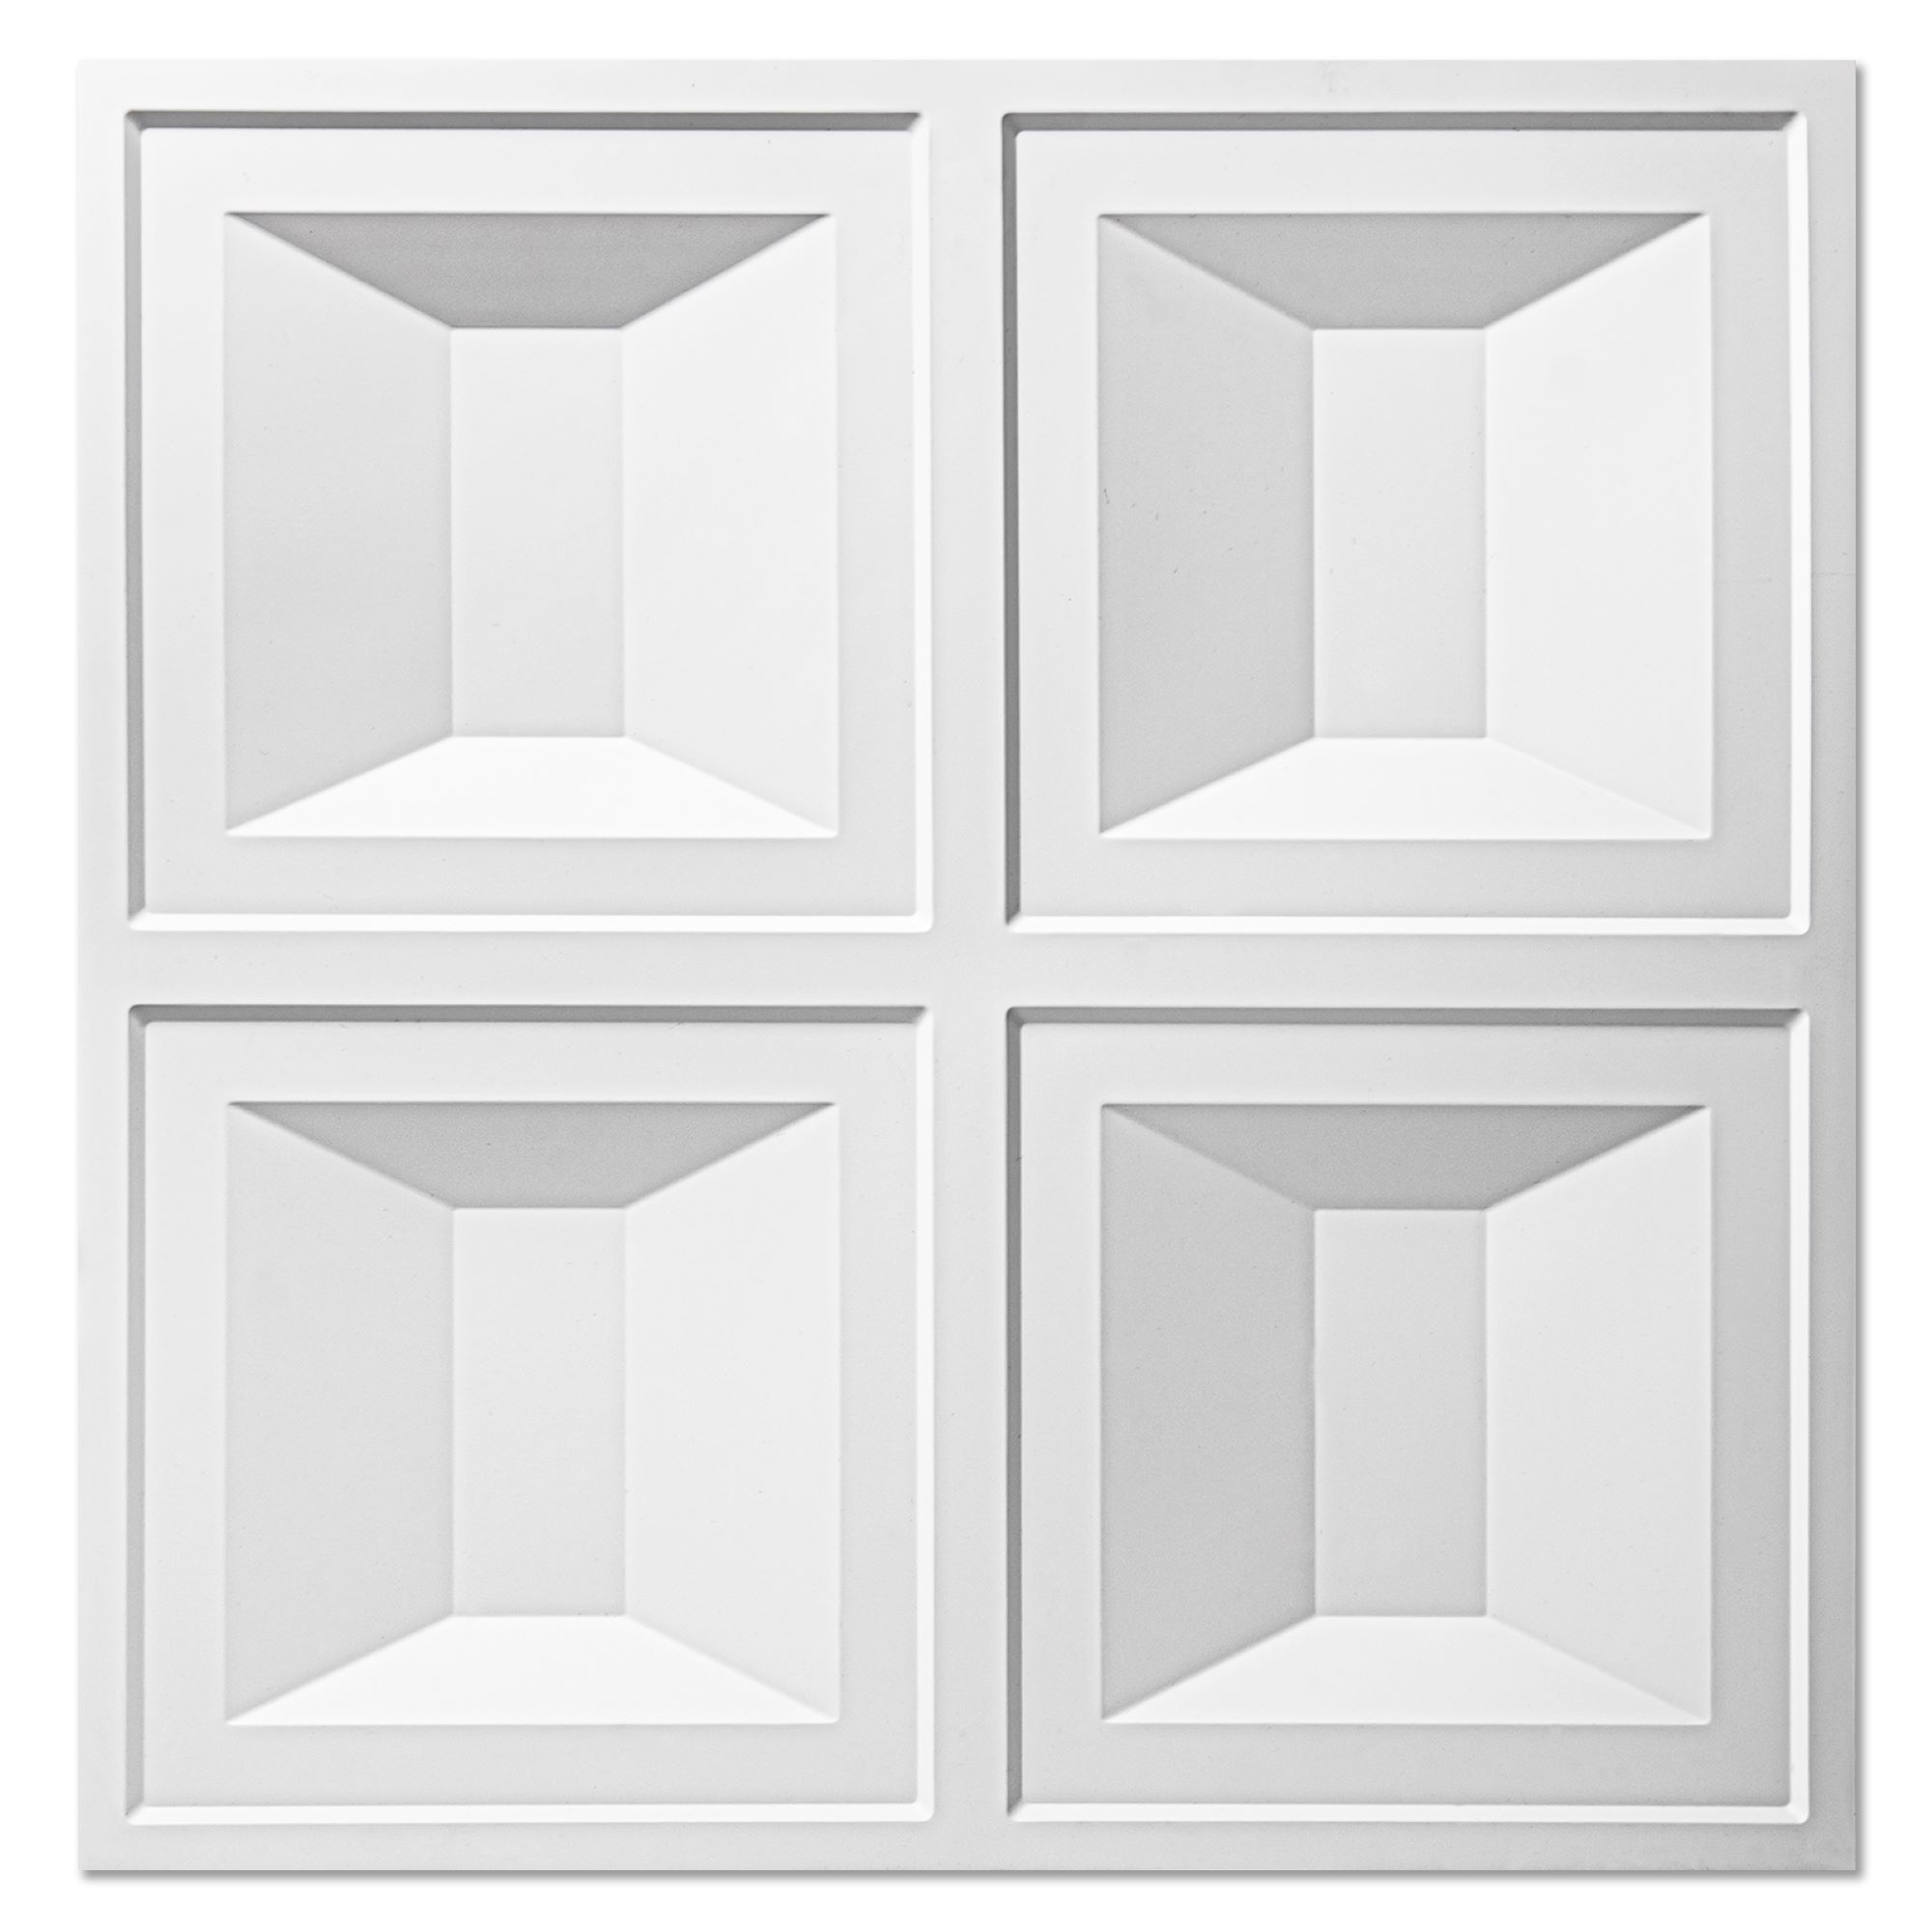 A10919-Art3d Drop Ceiling Tiles 24x24,PVC Decorative Panels,12 Pcs